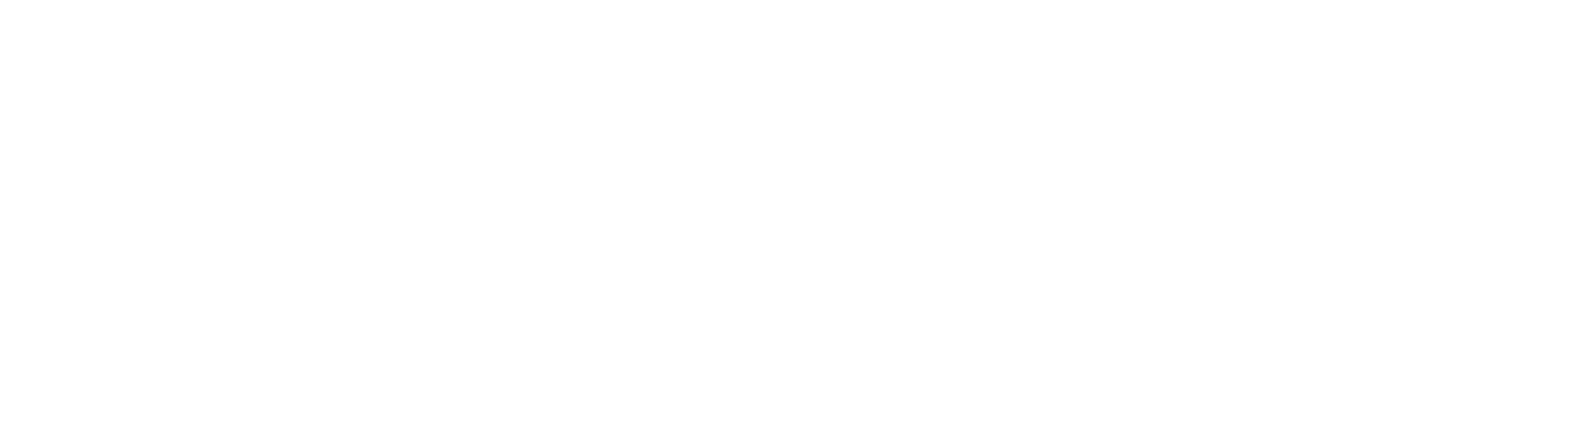 State Street Corporation
 logo large for dark backgrounds (transparent PNG)